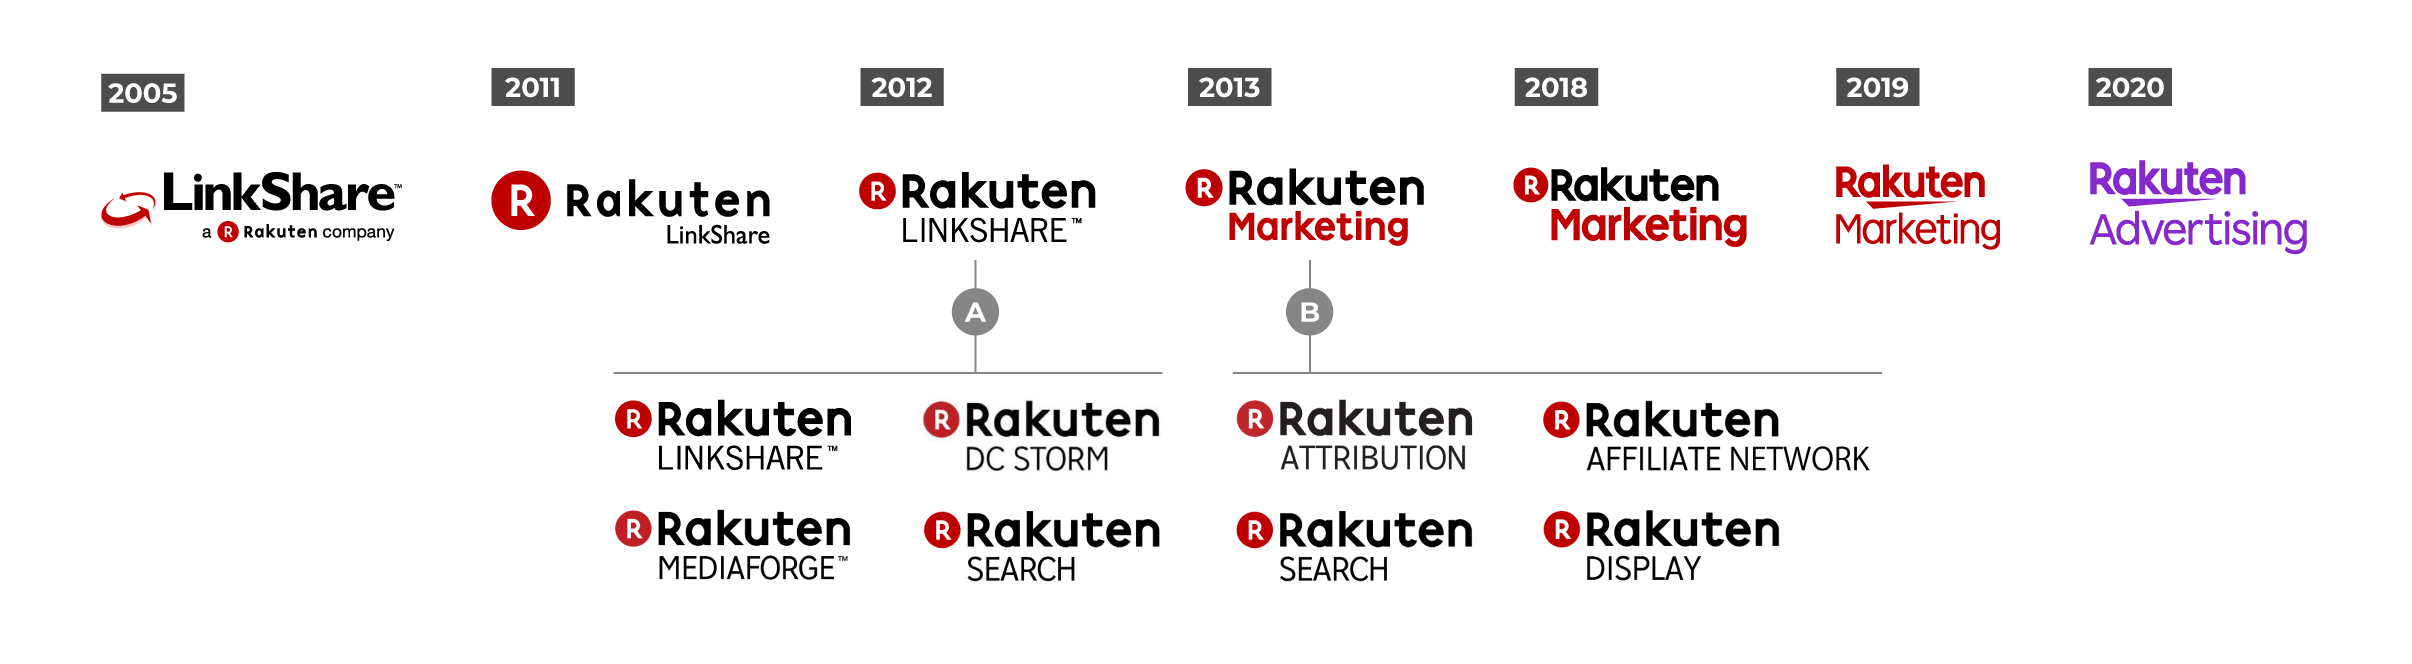 rakuten-advertising-rebrand-evolution-portfolio